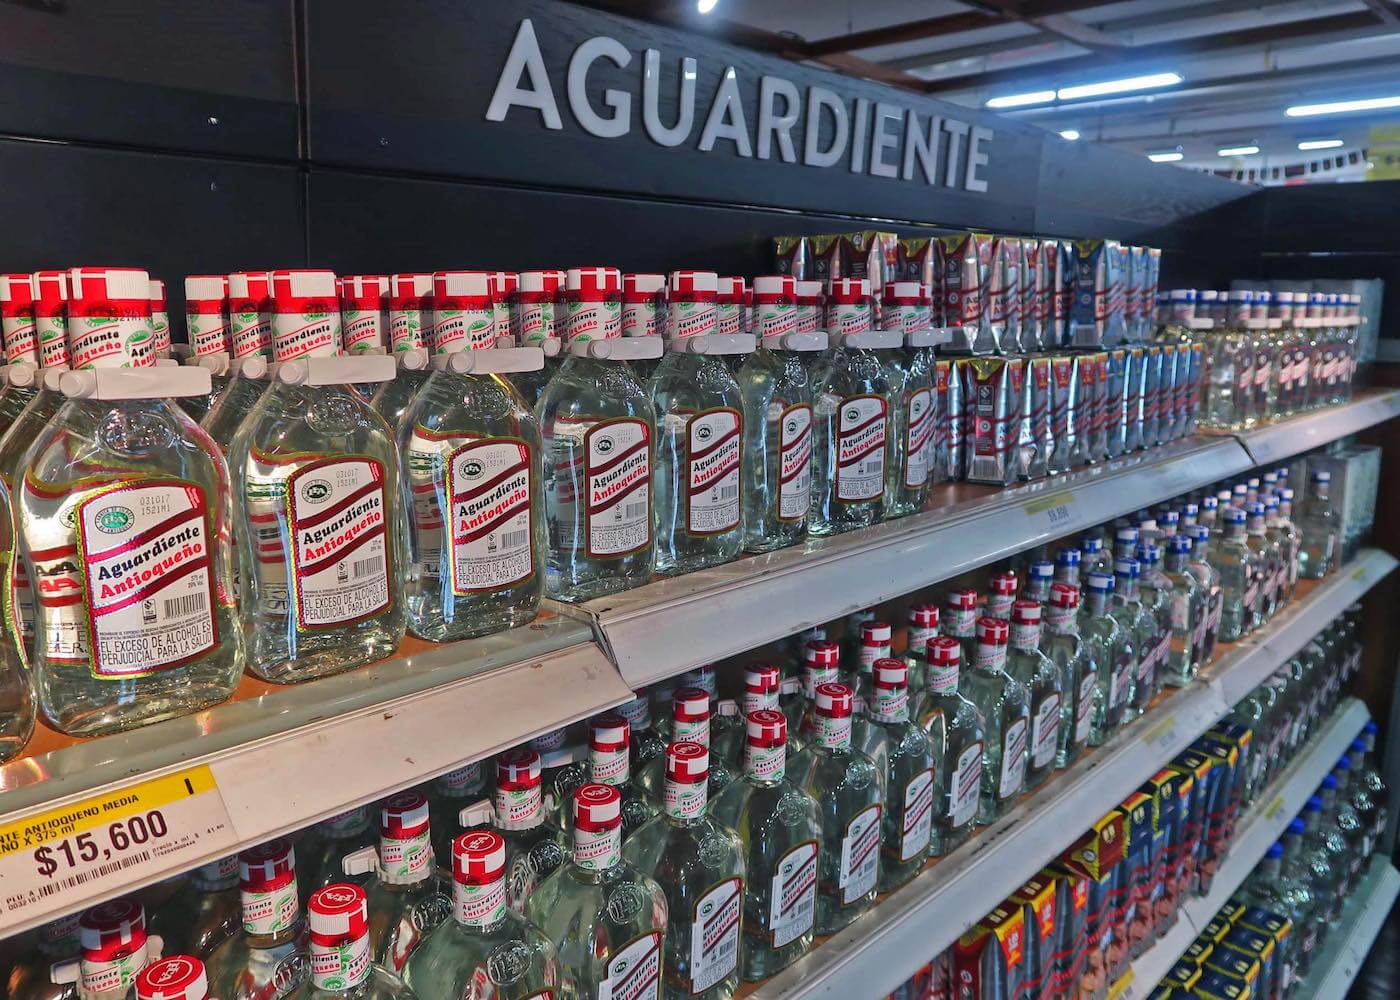 A shelf of aguardiente at Exito supermarket in Medellin